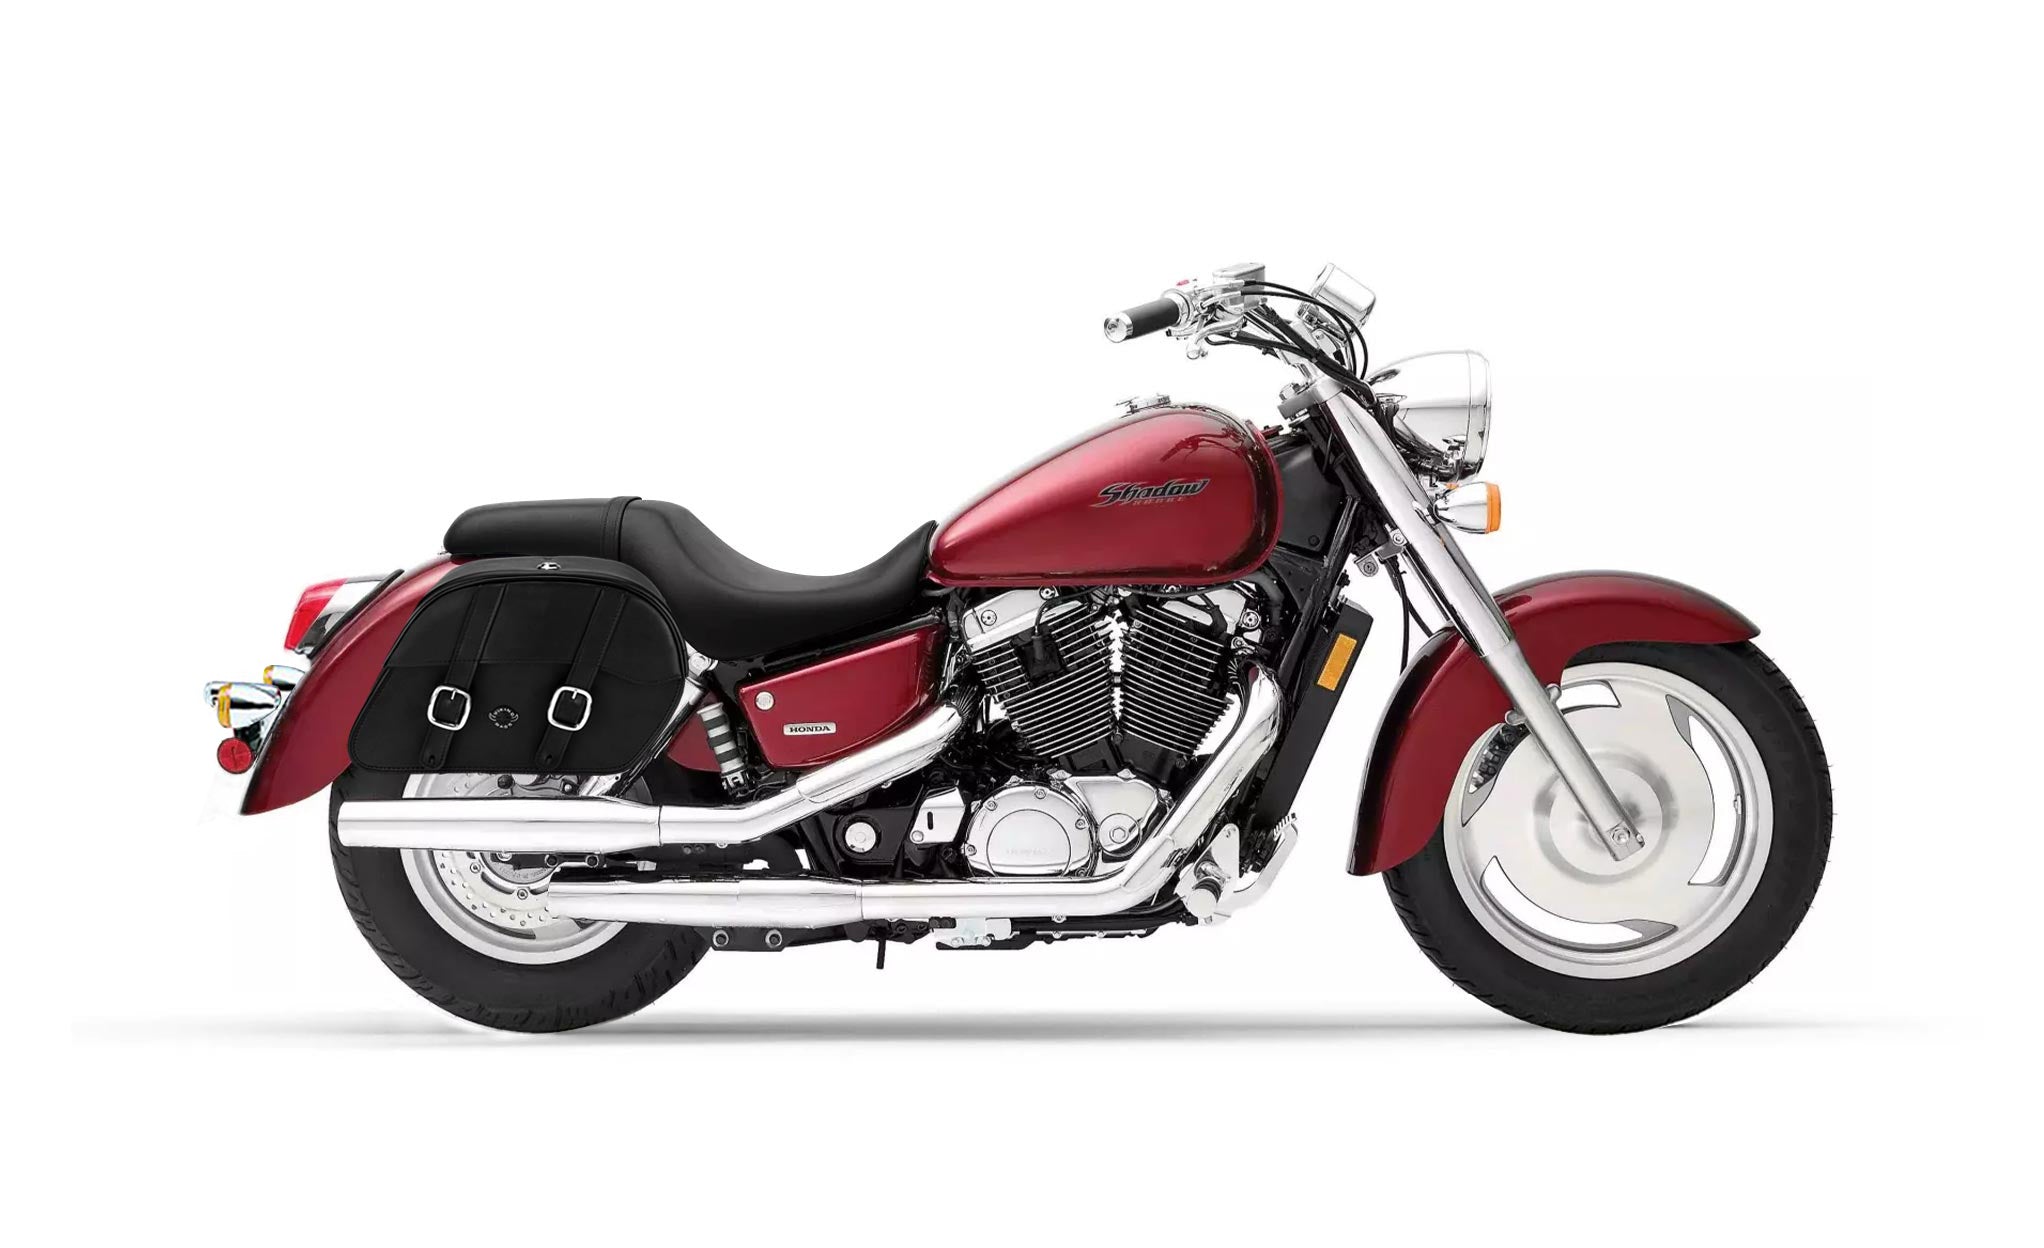 Viking Skarner Medium Lockable Honda Shadow 1100 Sabre Leather Motorcycle Saddlebags on Bike Photo @expand